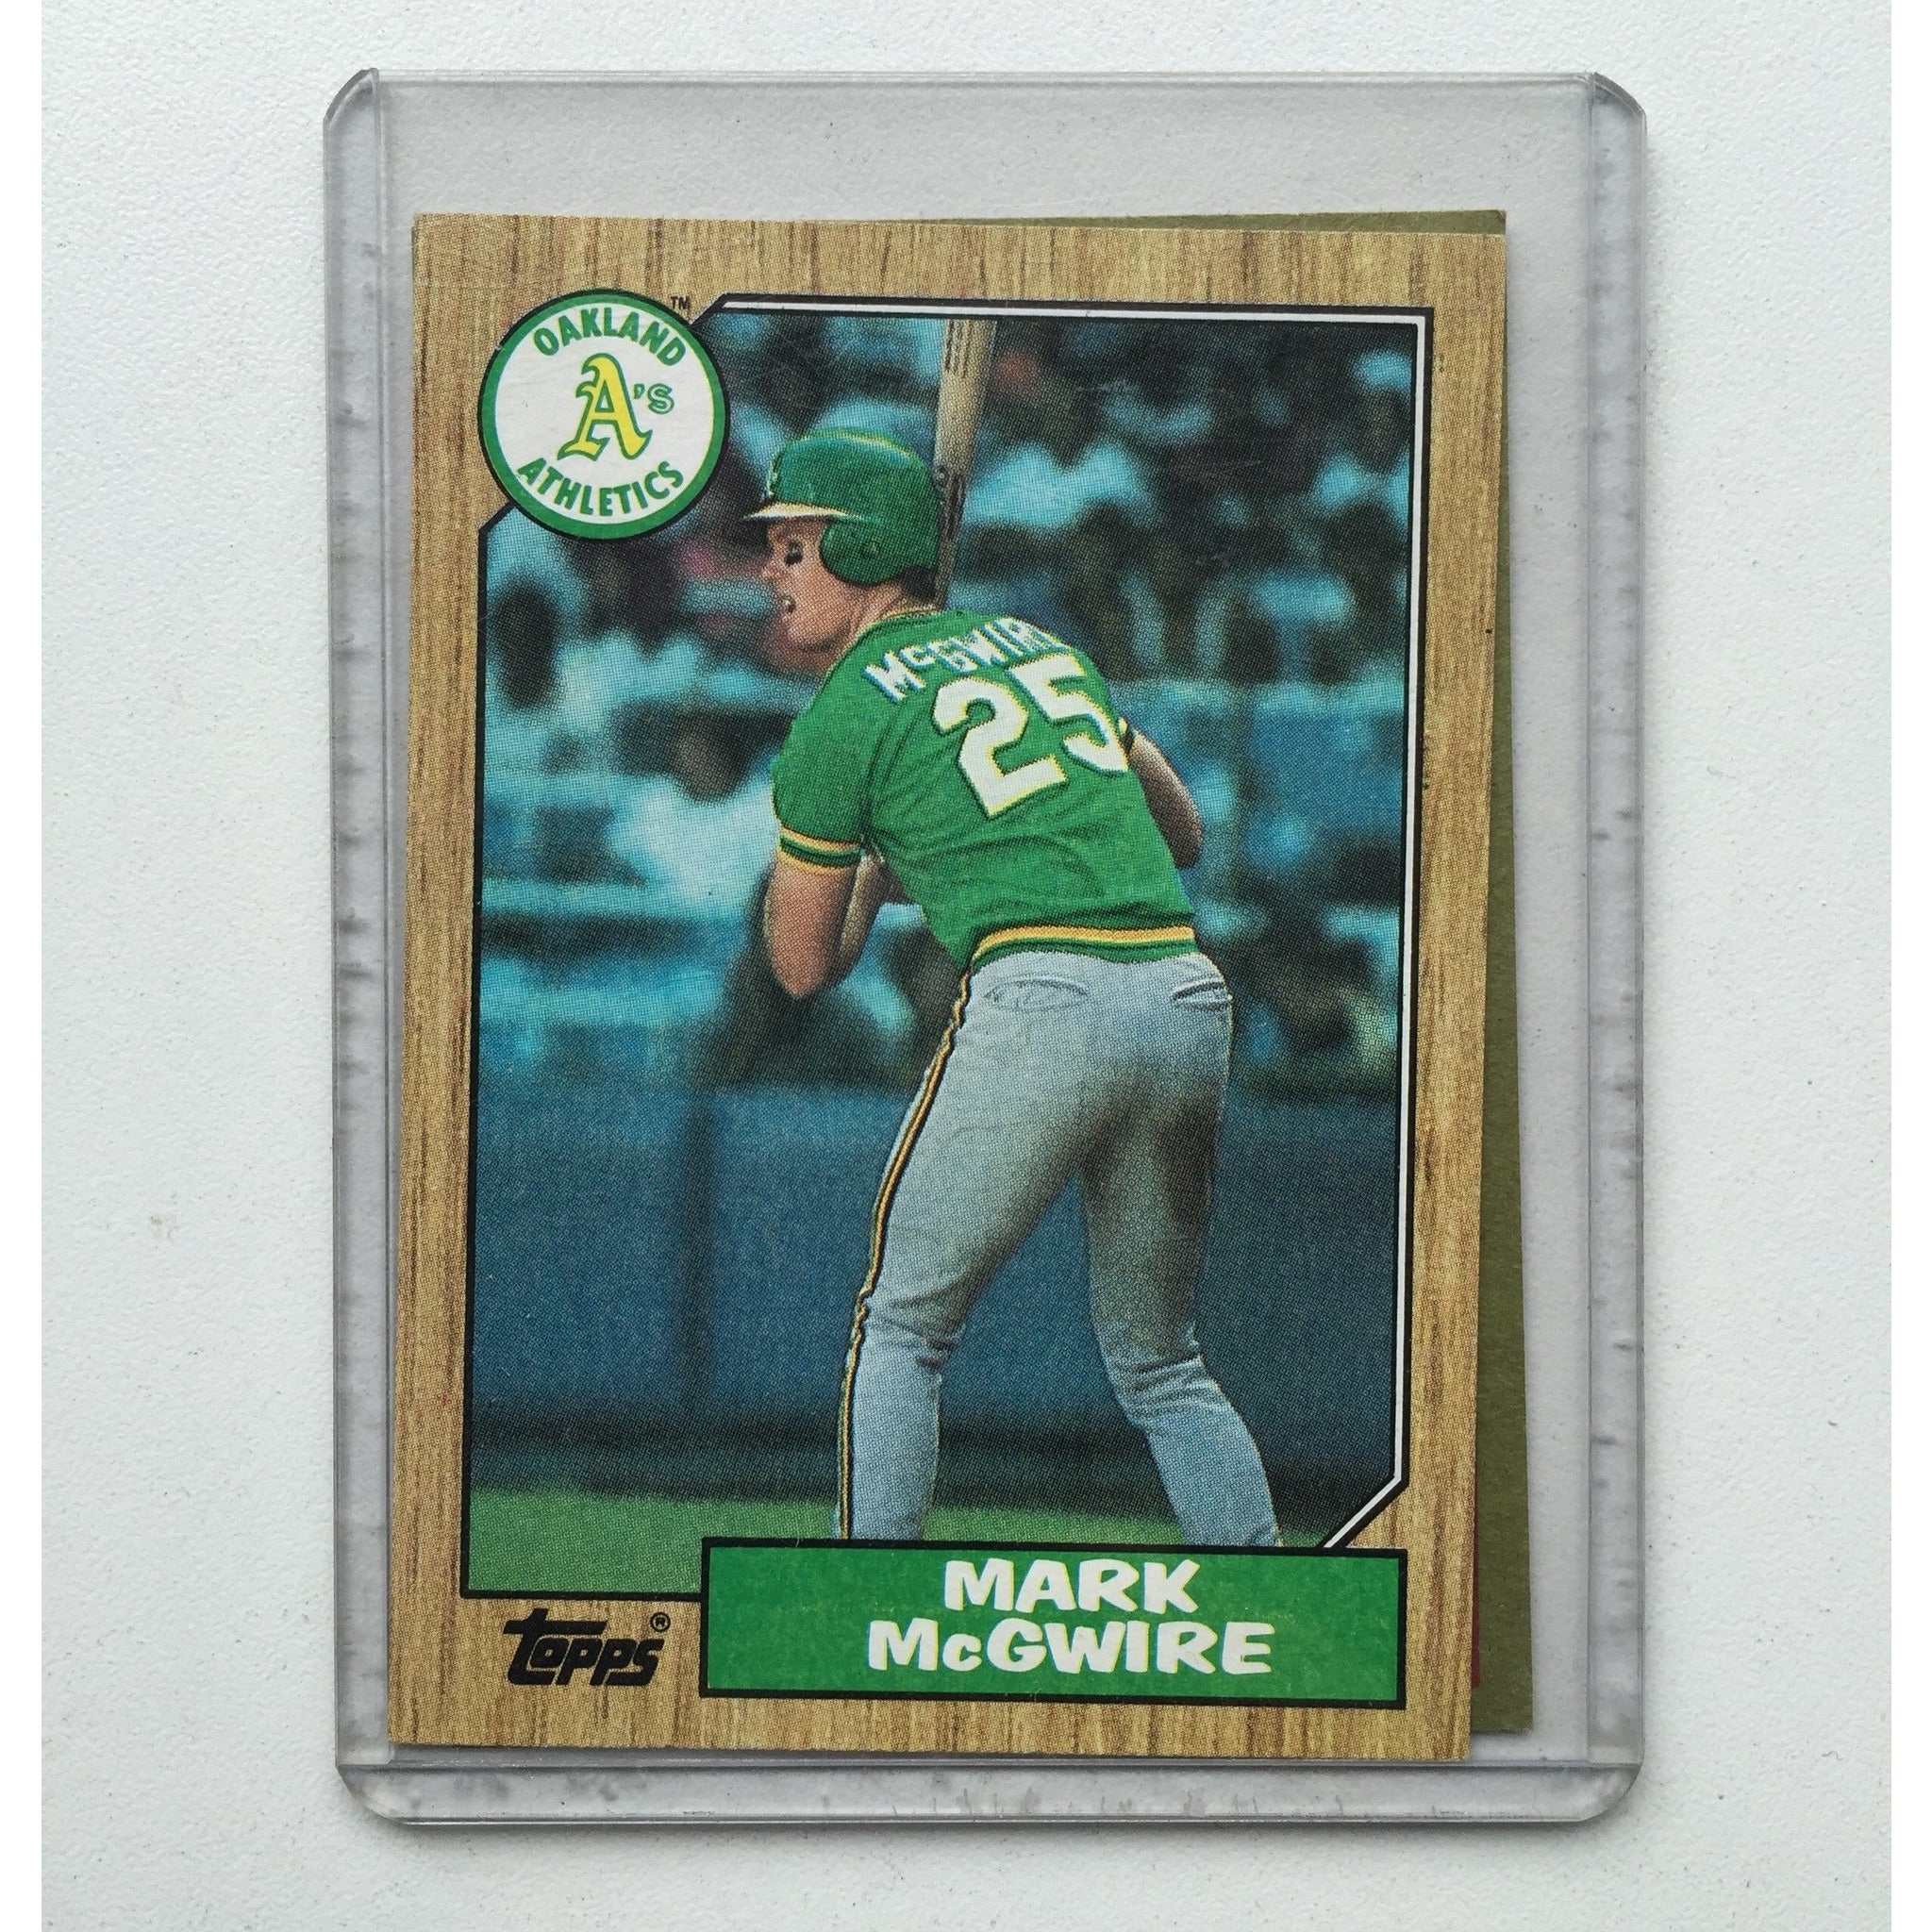 Mark Mcgwire rookie card